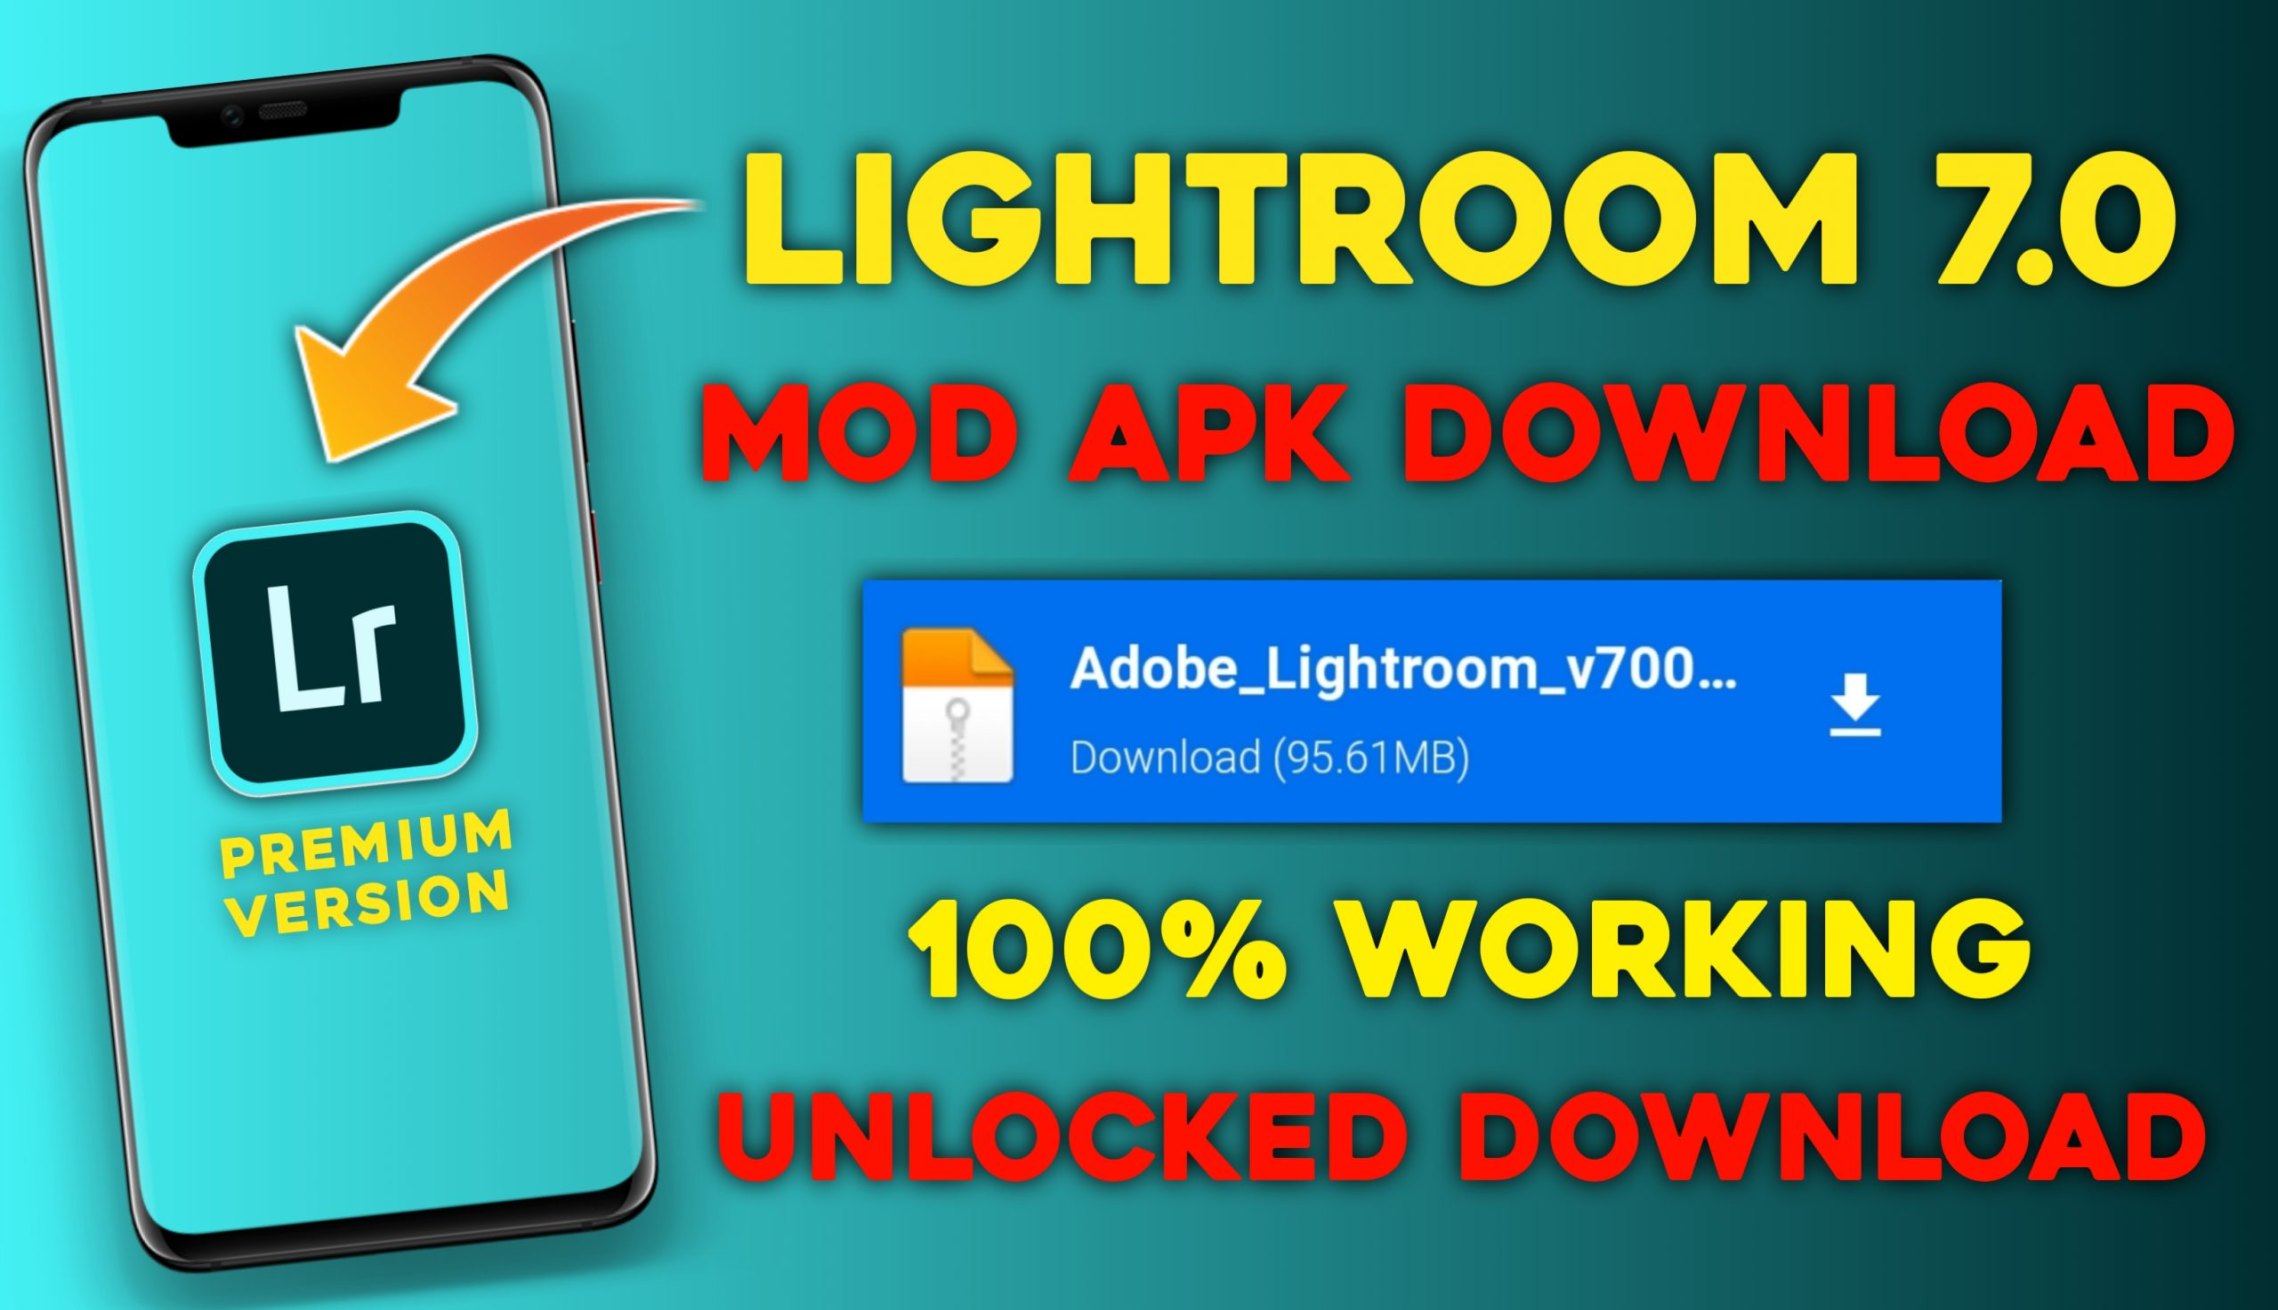 Adobe Lightroom MOD APK .